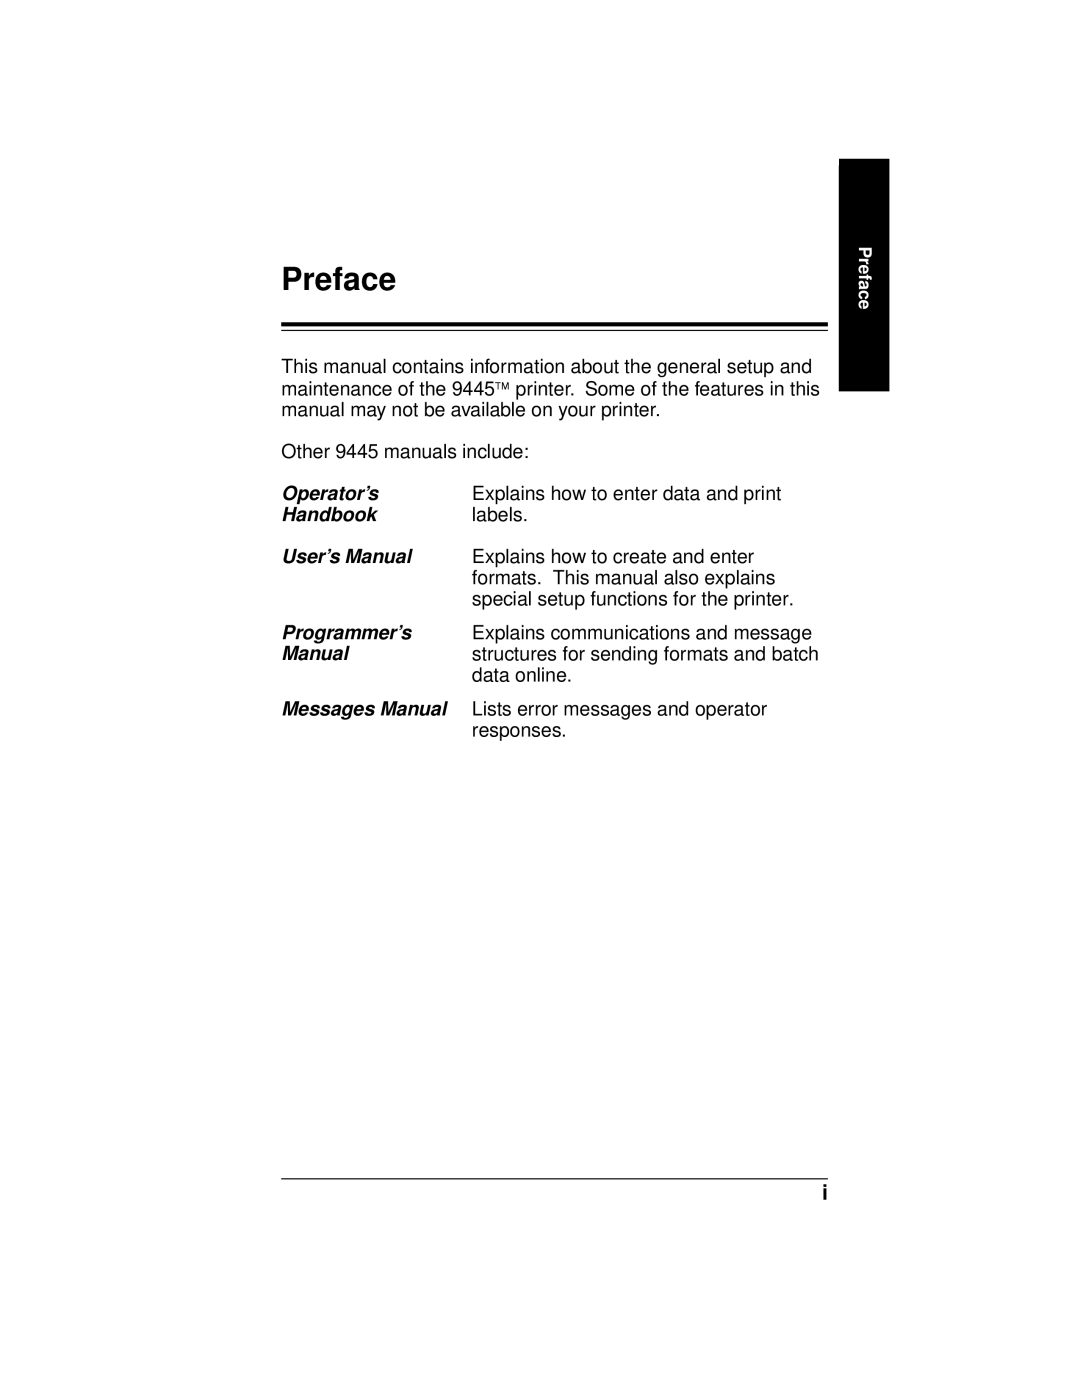 Paxar 9445 manual Preface, Operator’s, Handbook, User’s Manual, Programmer’s, Messages Manual 